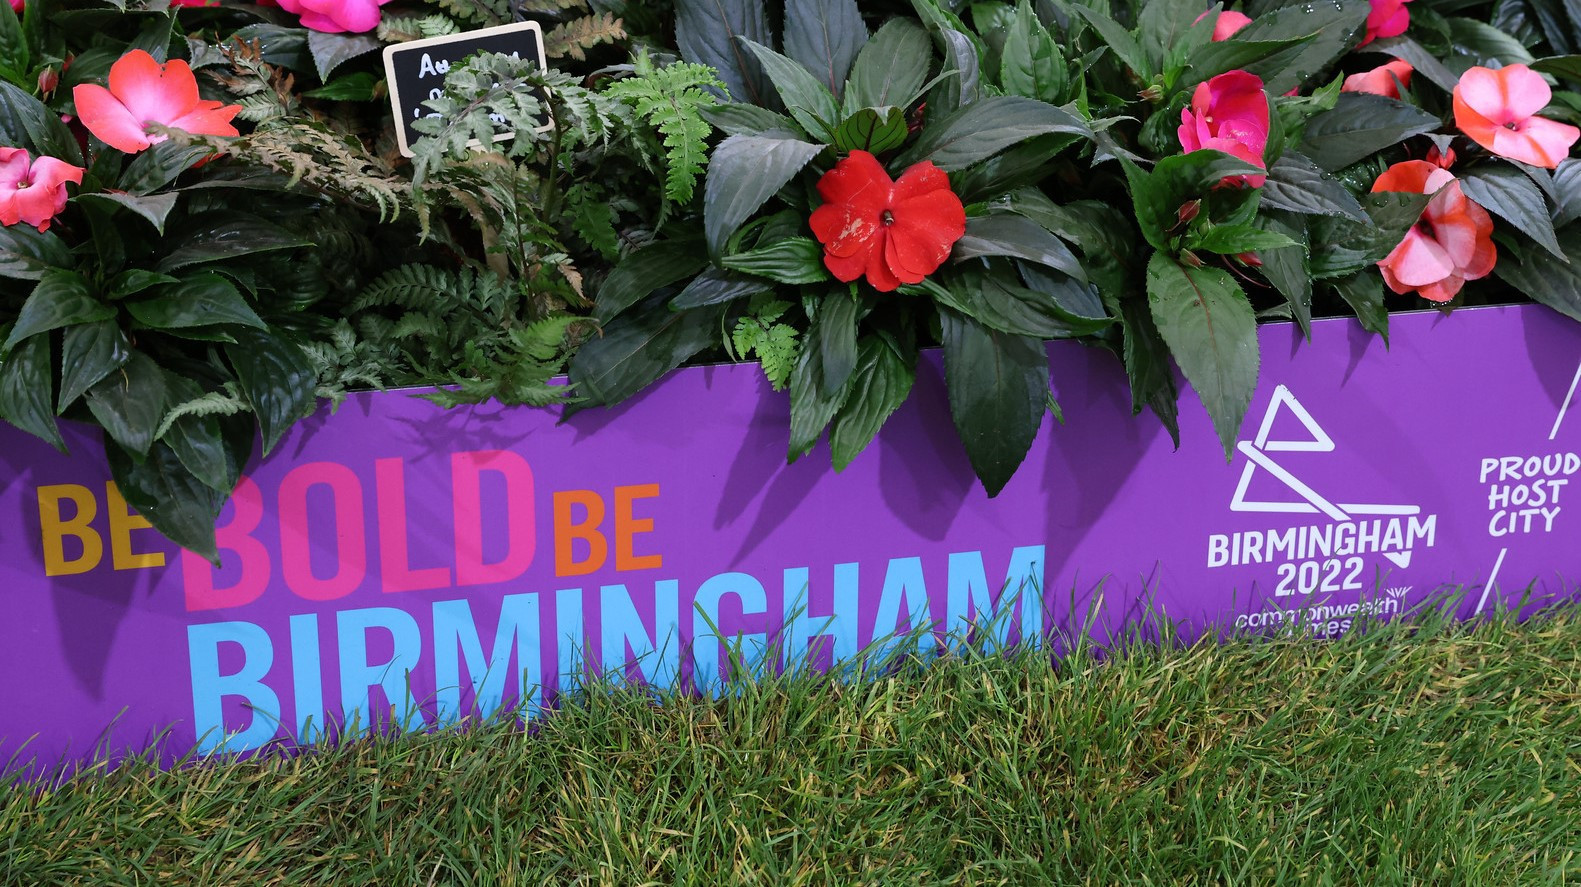 Birmingham 2022 has published an updated legacy plan ©Birmingham 2022